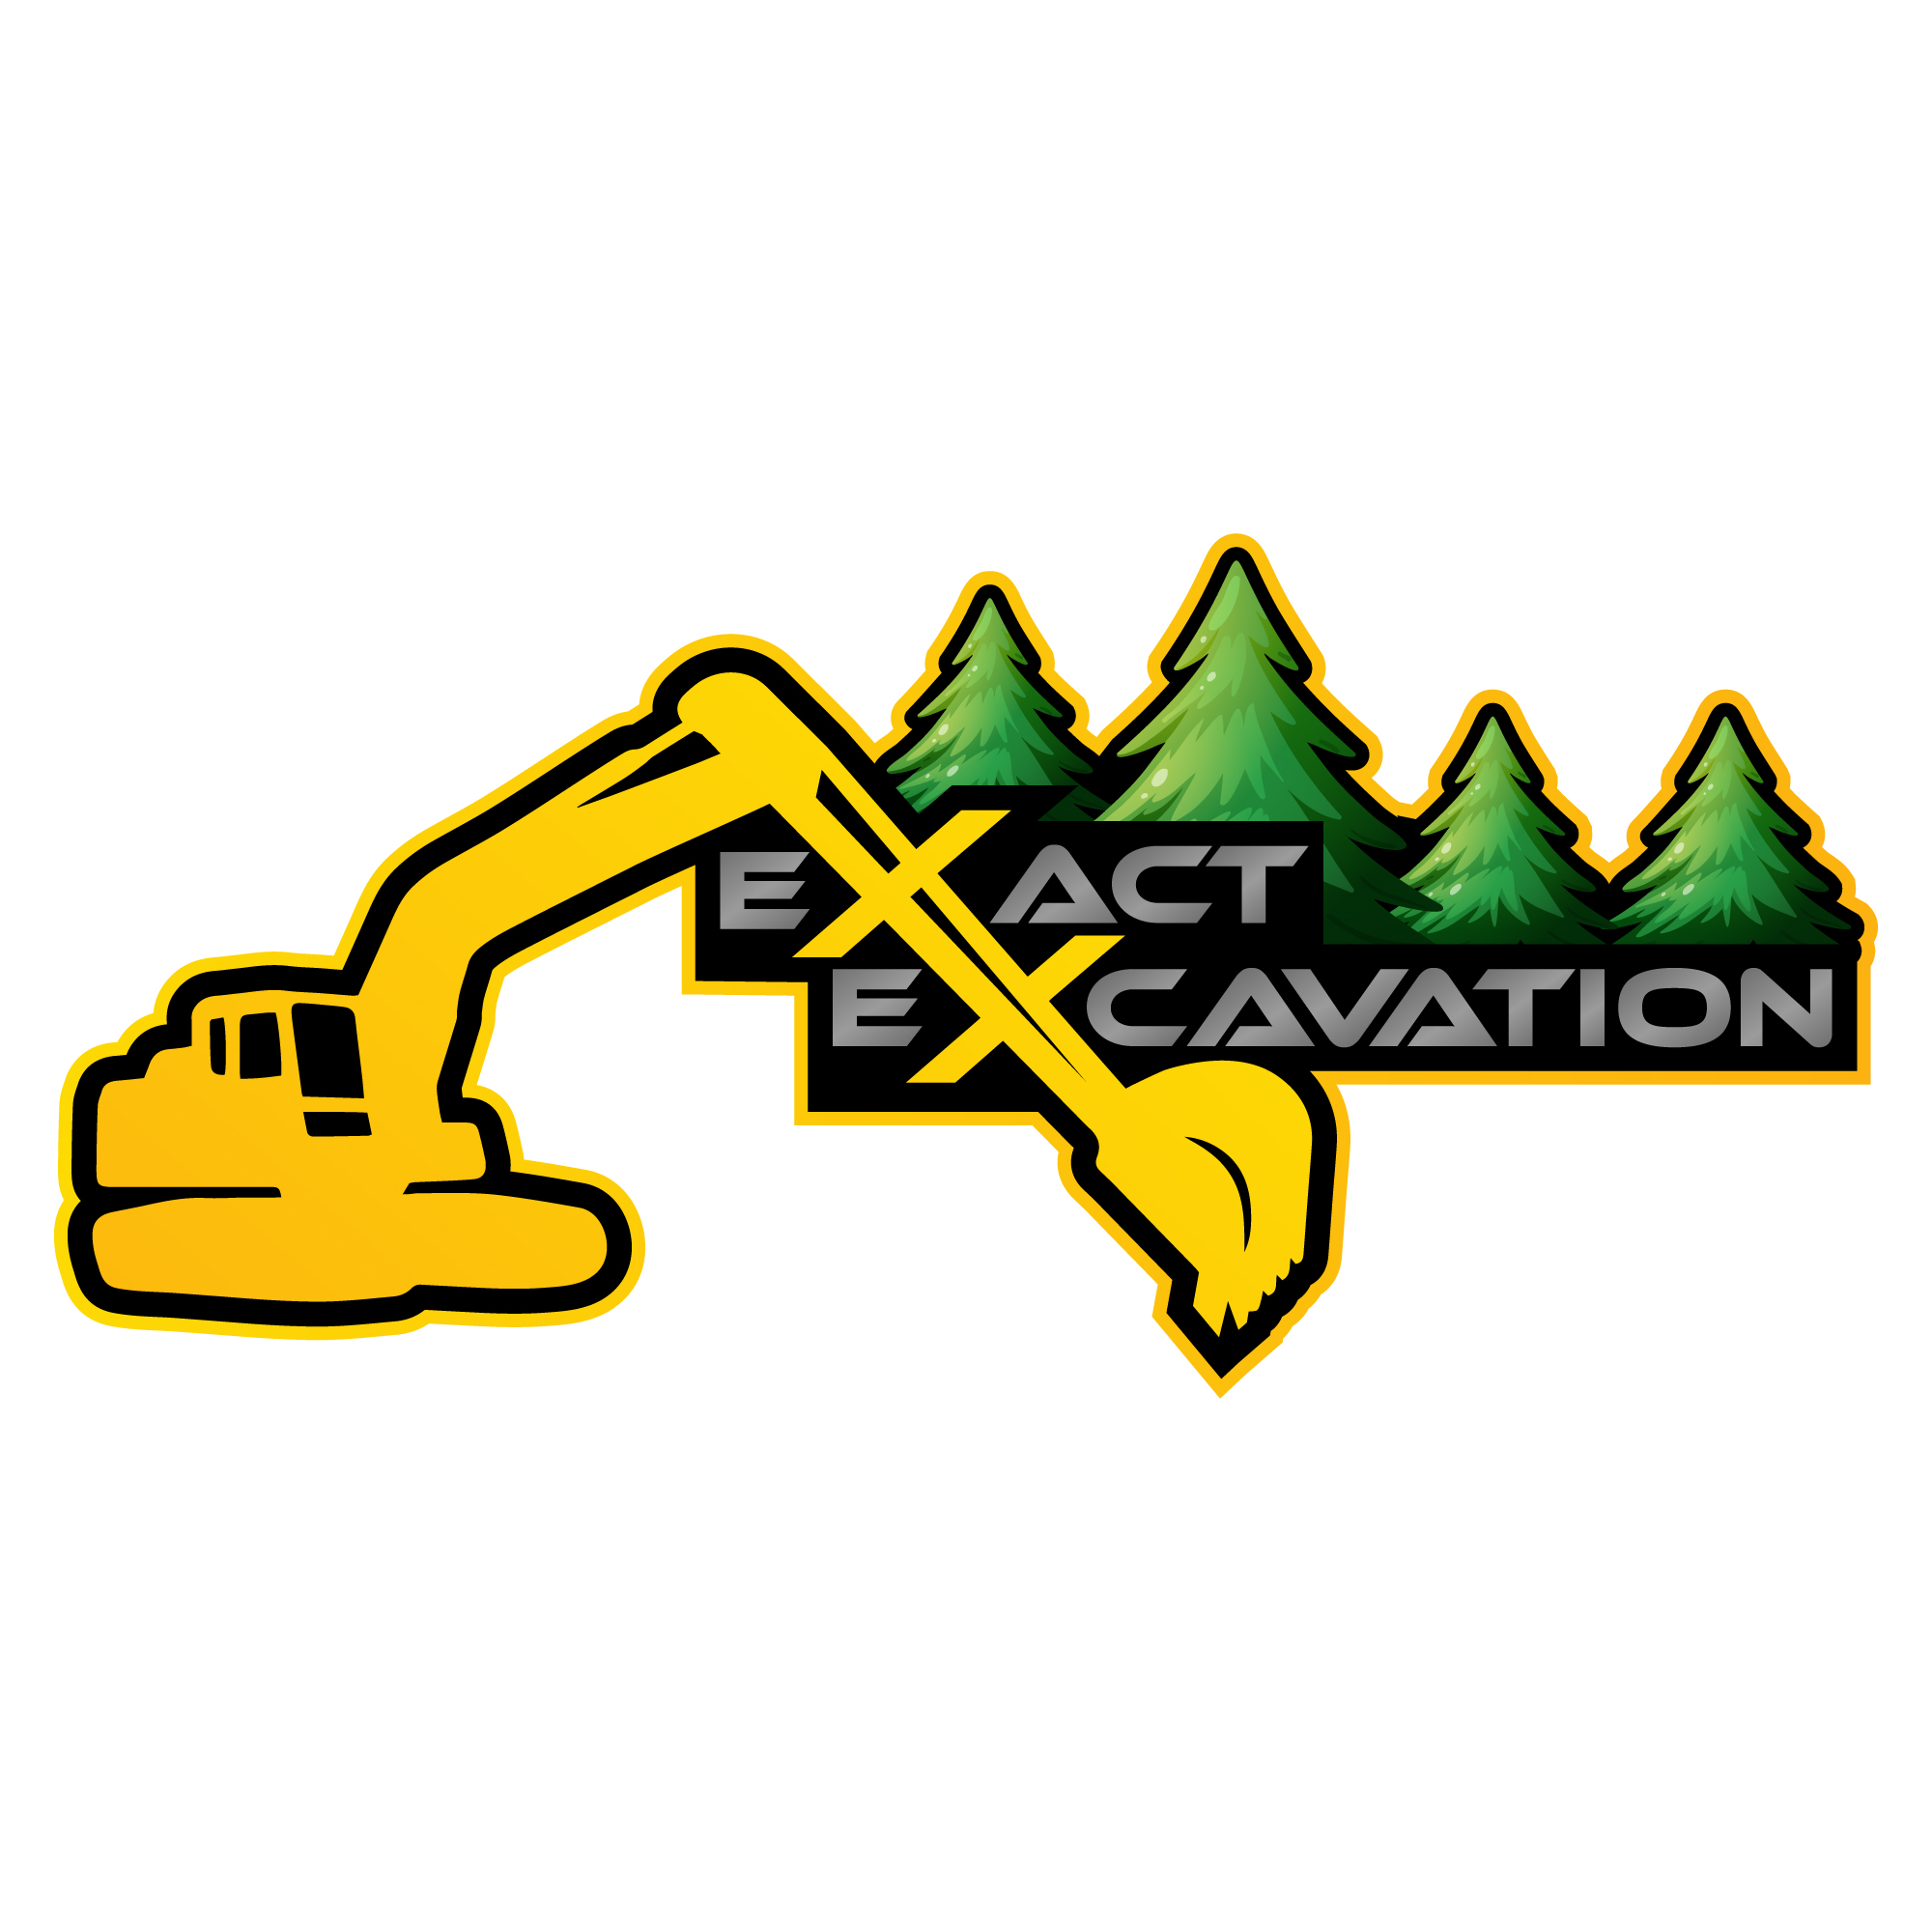 spot-n-designs-logo-creation-business-cards-exact-excavation-yelm-washington